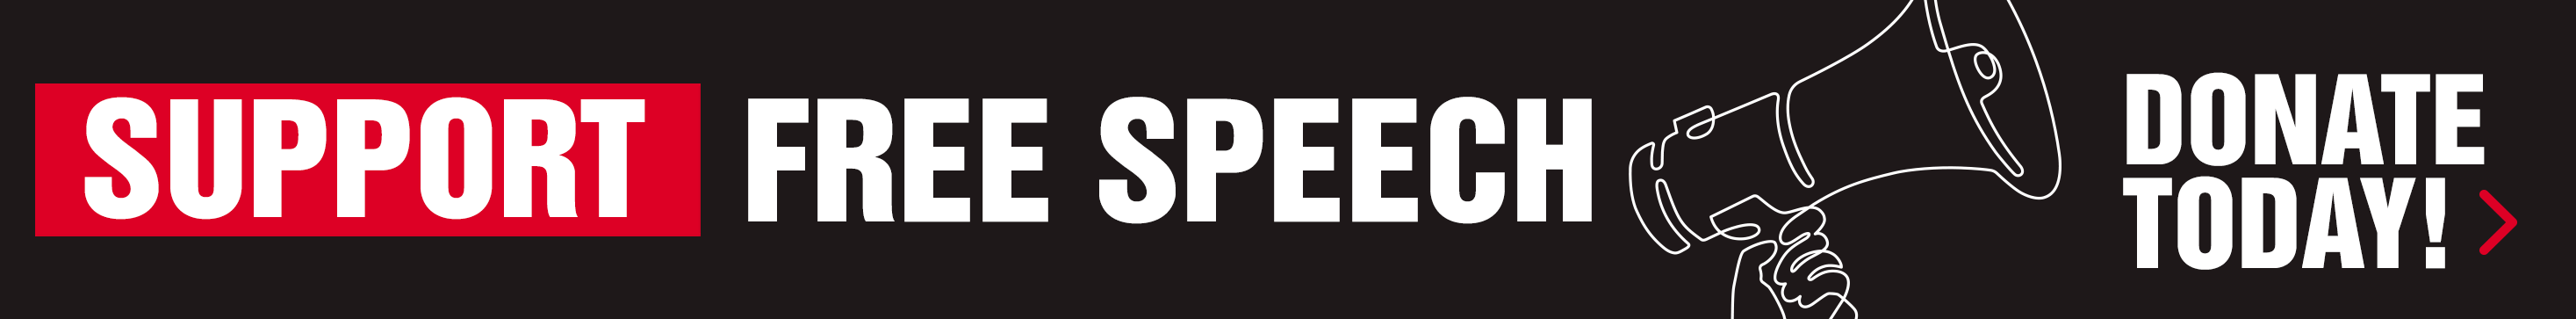 Free-Speech-topBanner-2.png